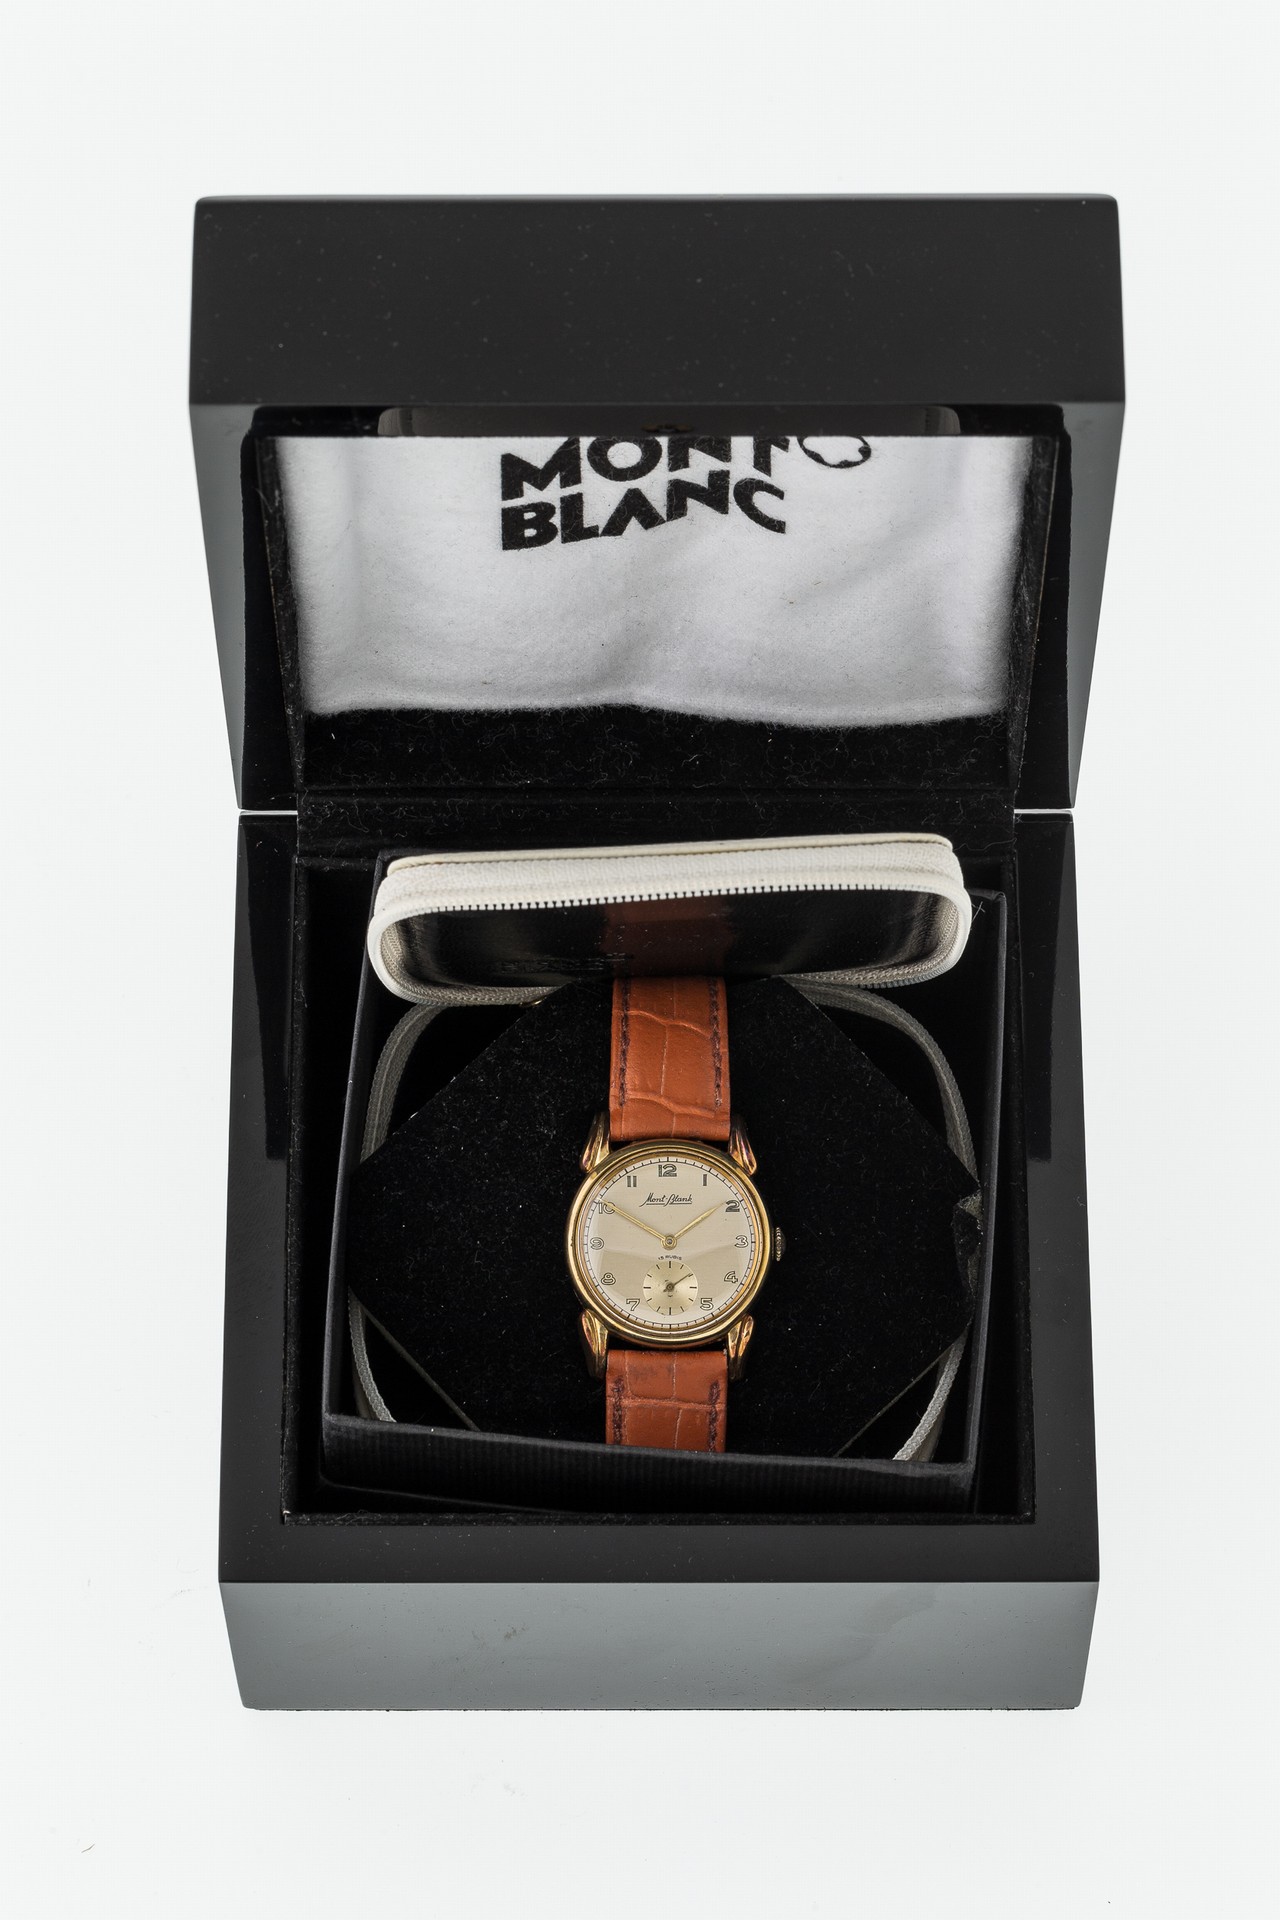 Montblanc Vintage-Uhr - Image 2 of 2